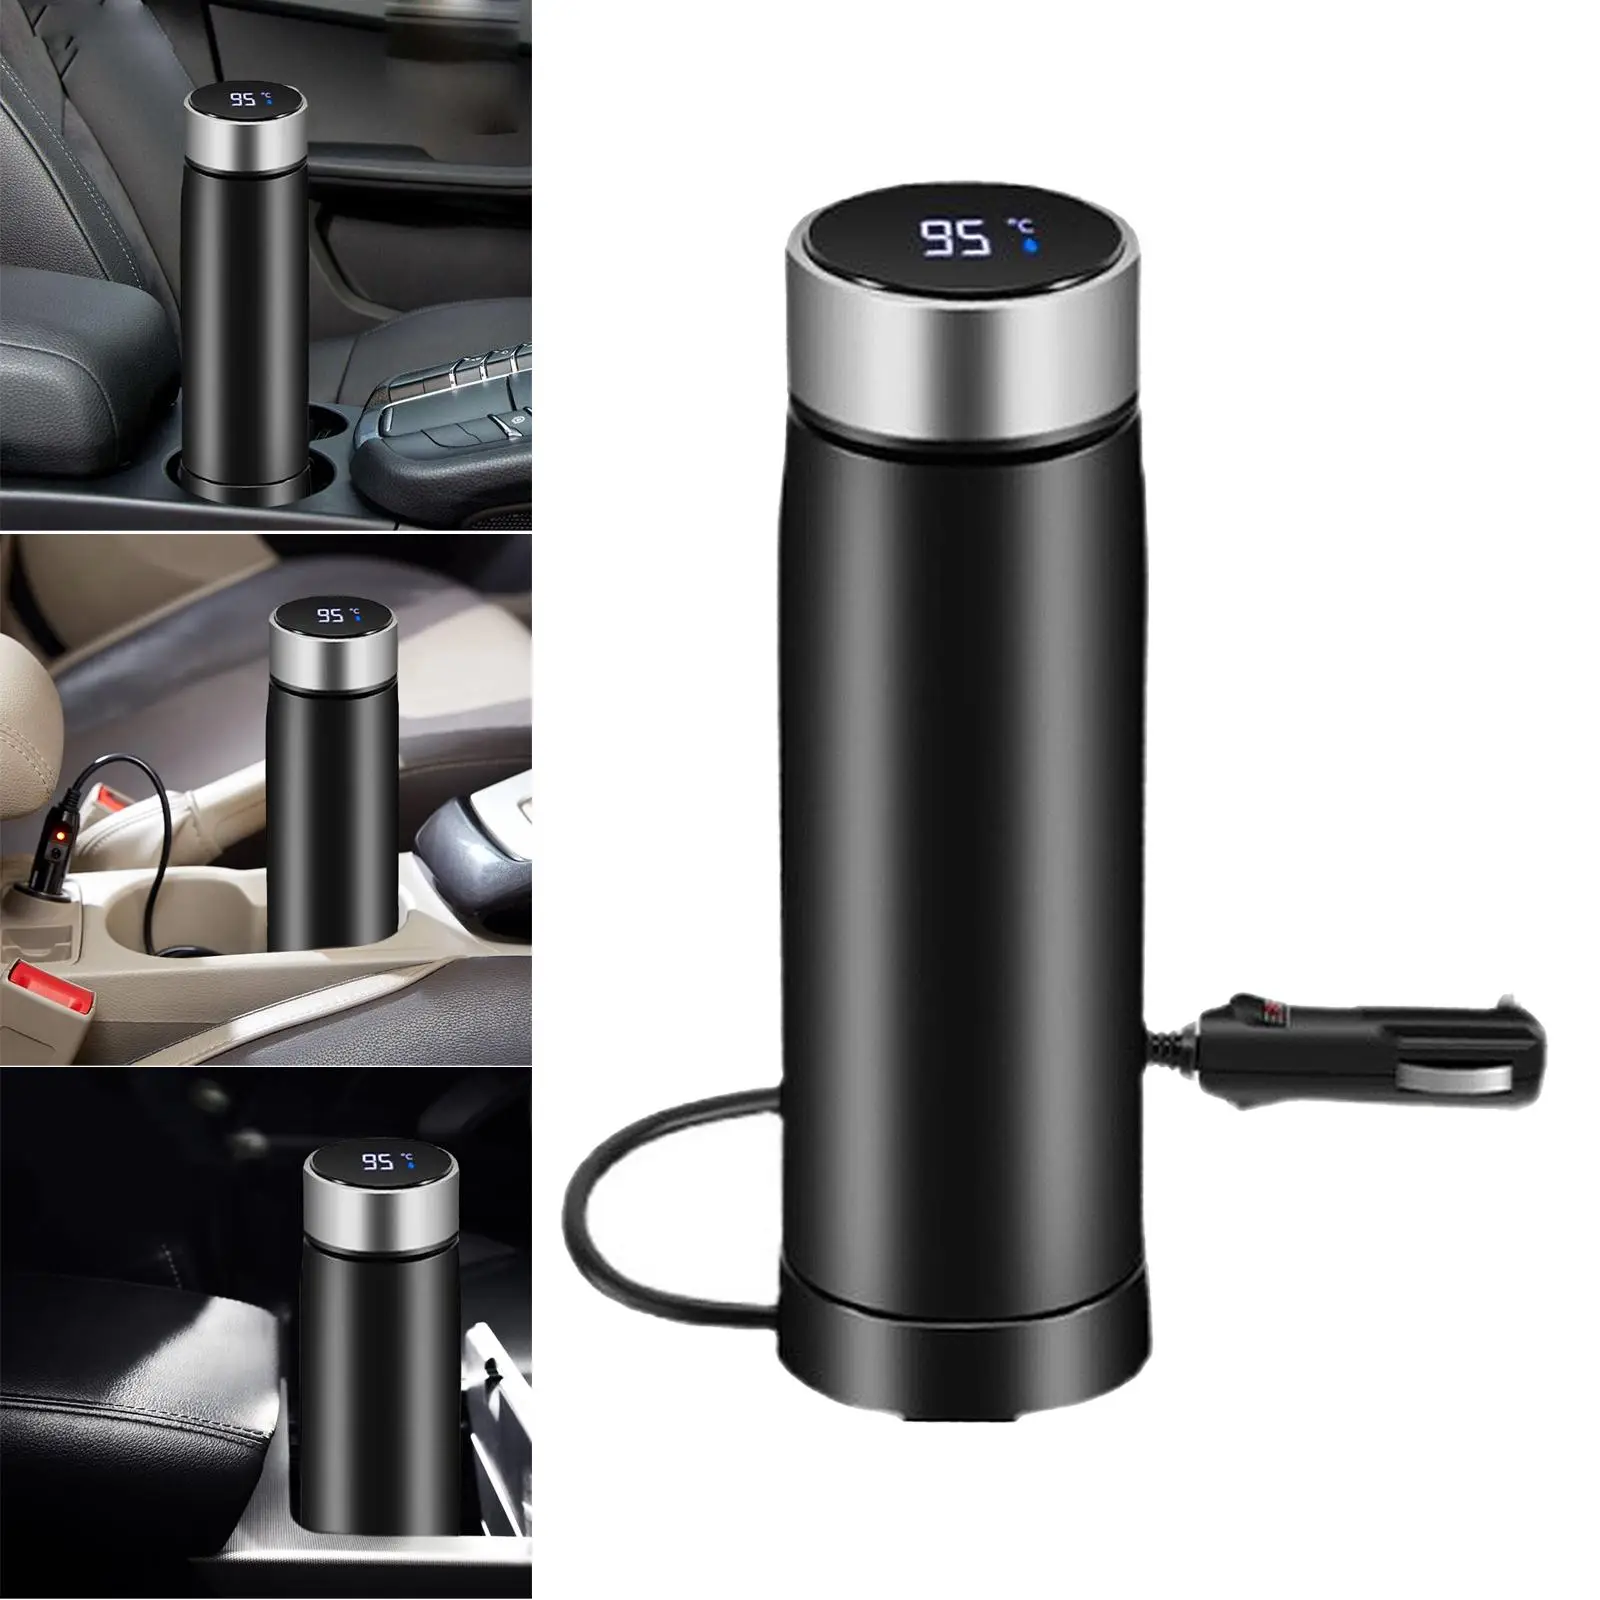 Portable Car Heating Cup Car Heated Mug Tumbler Smart Cup Heater Electric Heated Travel Mug for Coffee Milk Water Warmer Travel